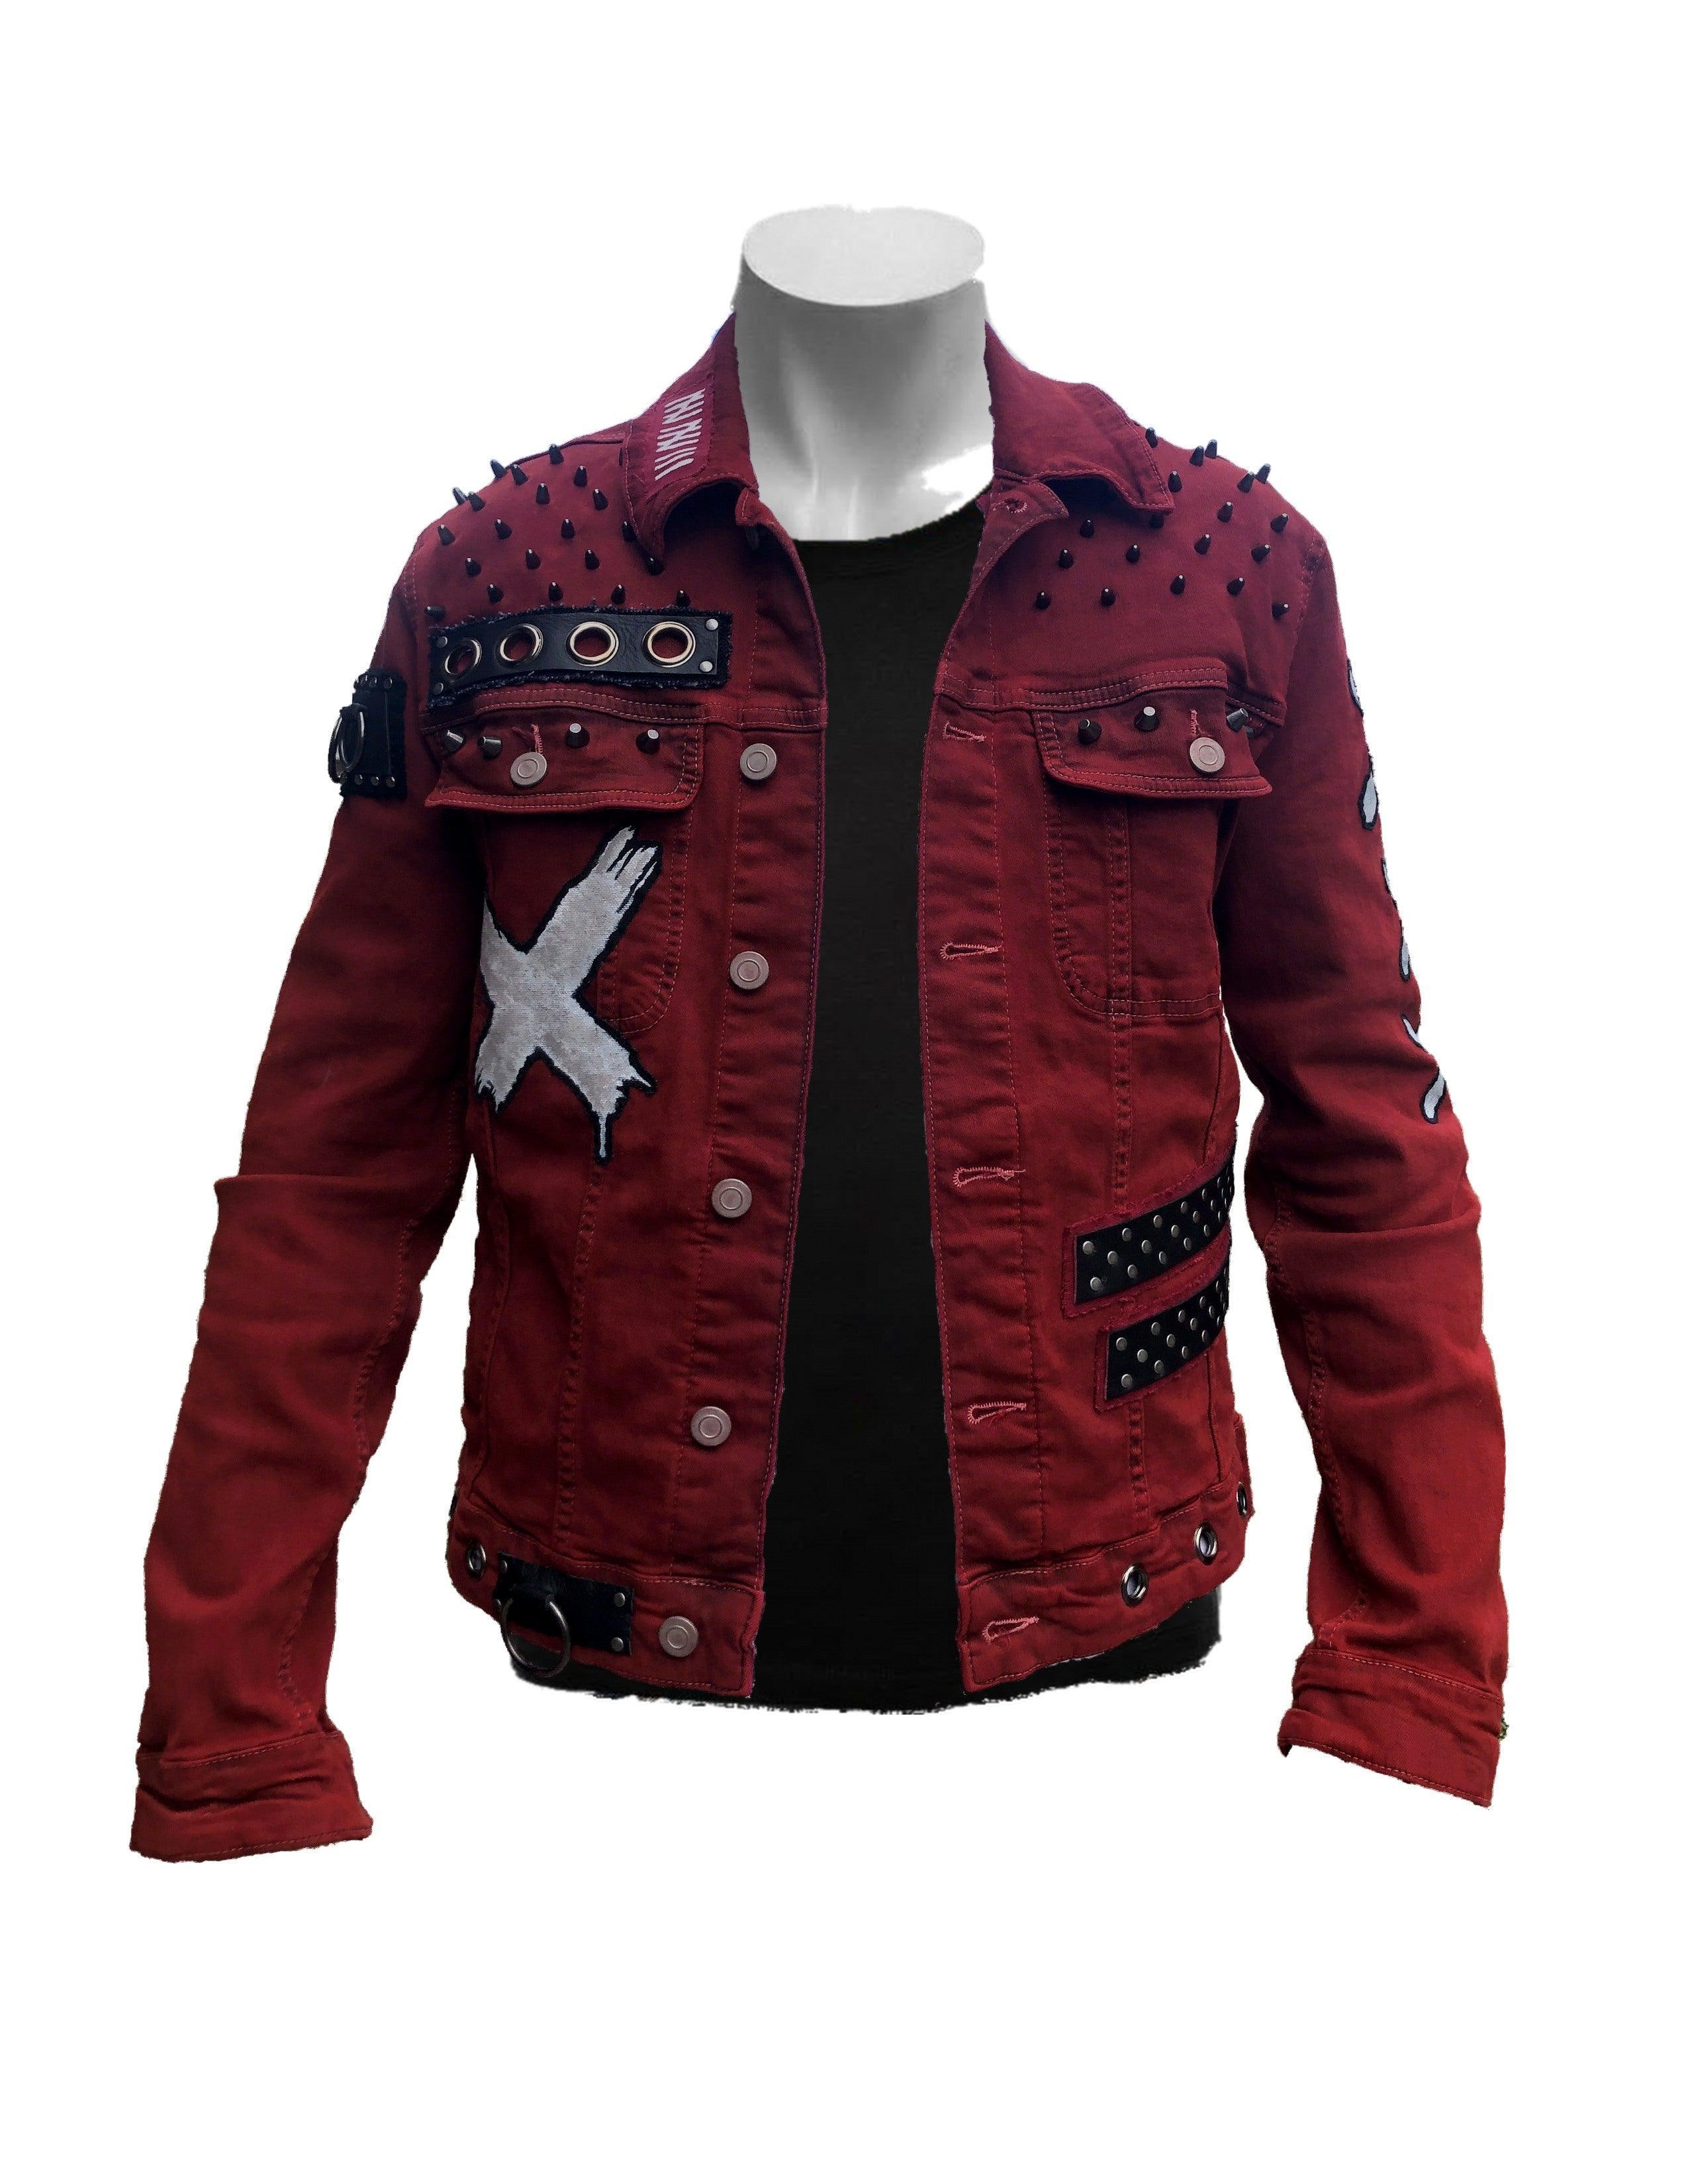 Scarlet Red Punk Rock Battle Jacket (The Forsaken) – Boomers are 